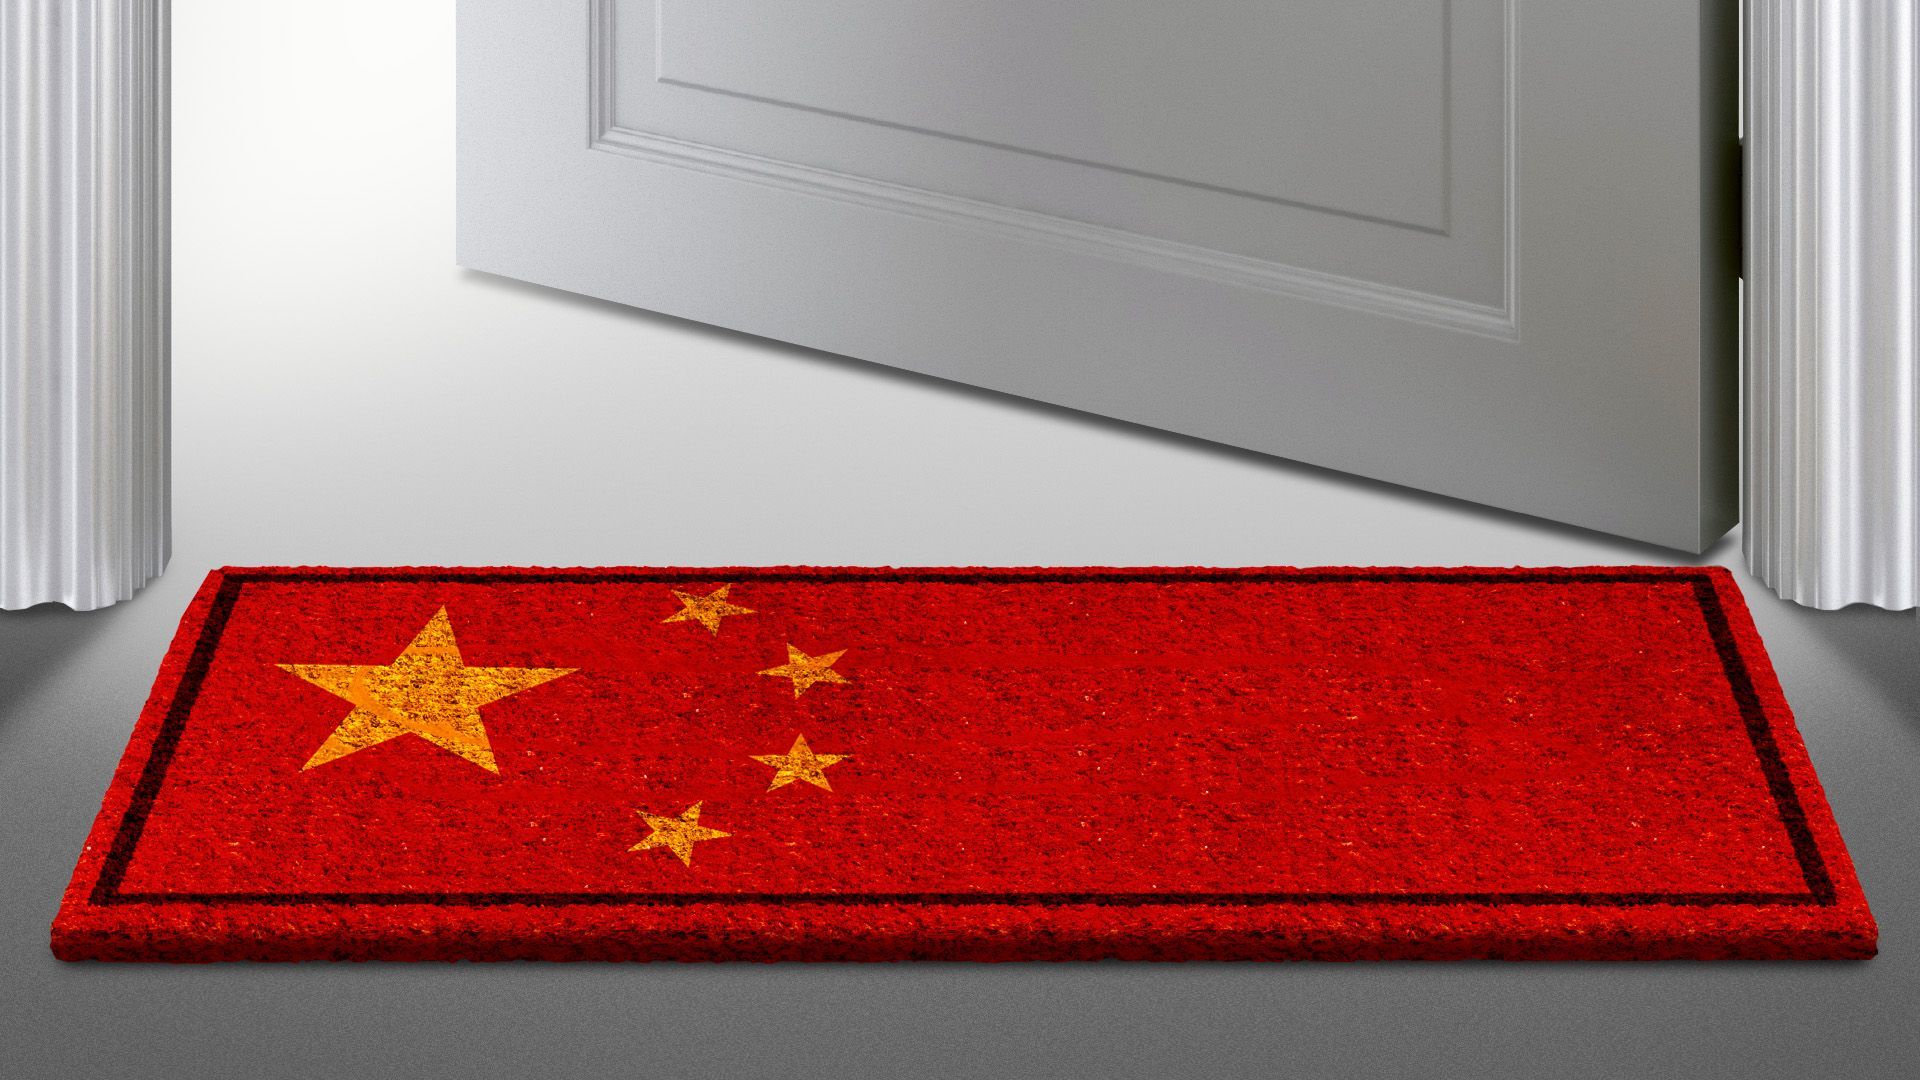 Illustration of a chinese flag door mat in front of an open door